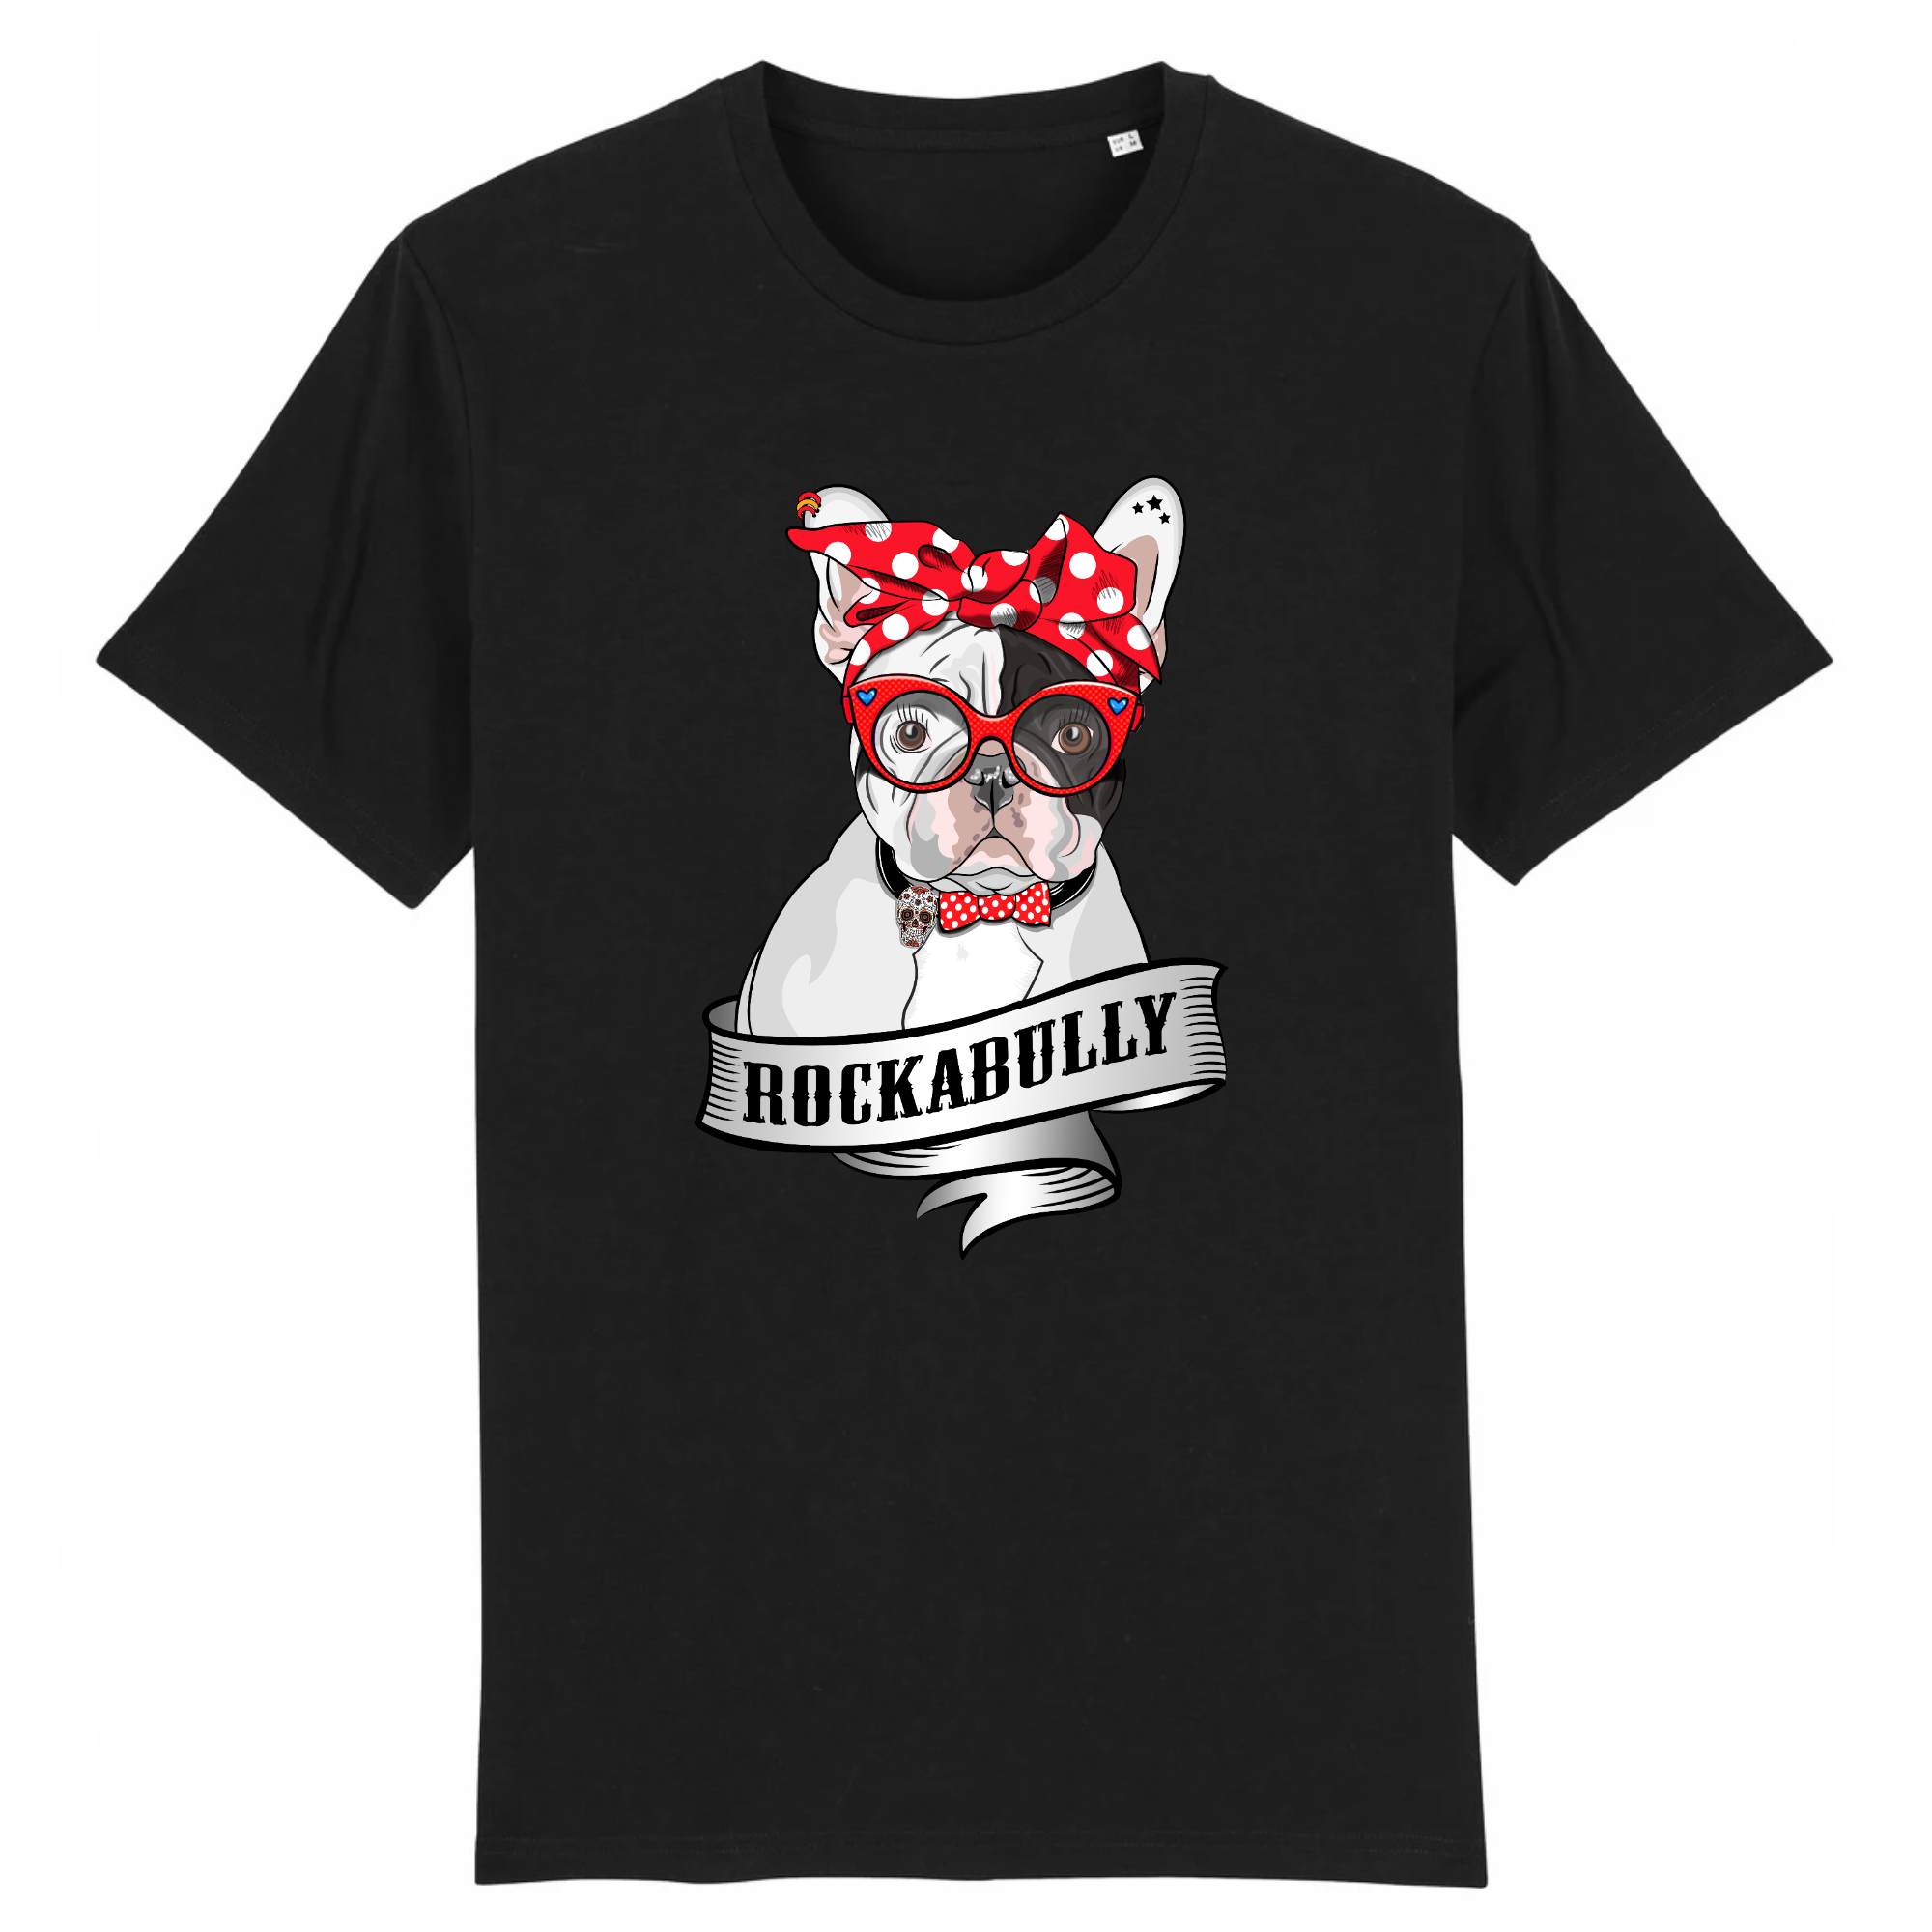 T-shirt- bio-Franch Bully Rockerbully